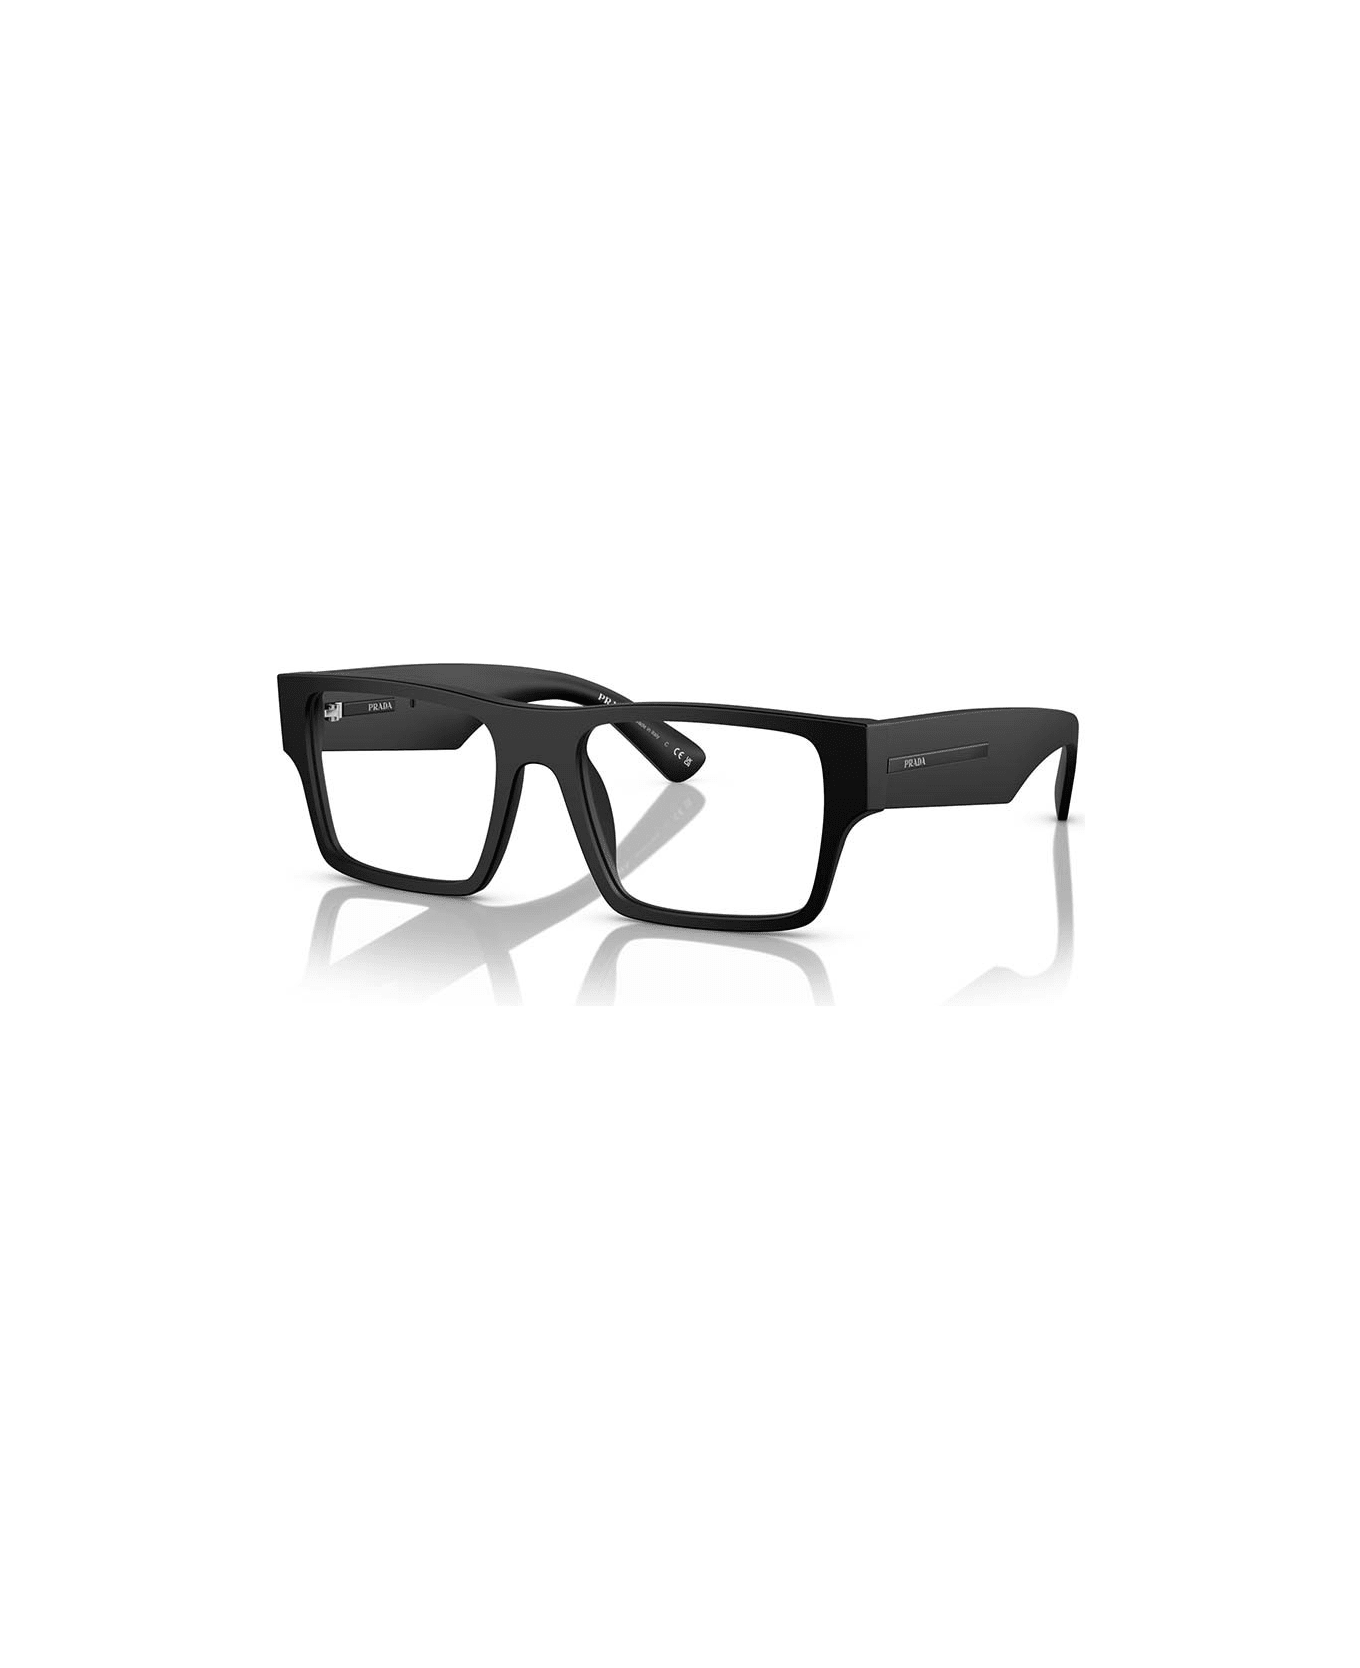 Prada Eyewear Glasses - Nero アイウェア